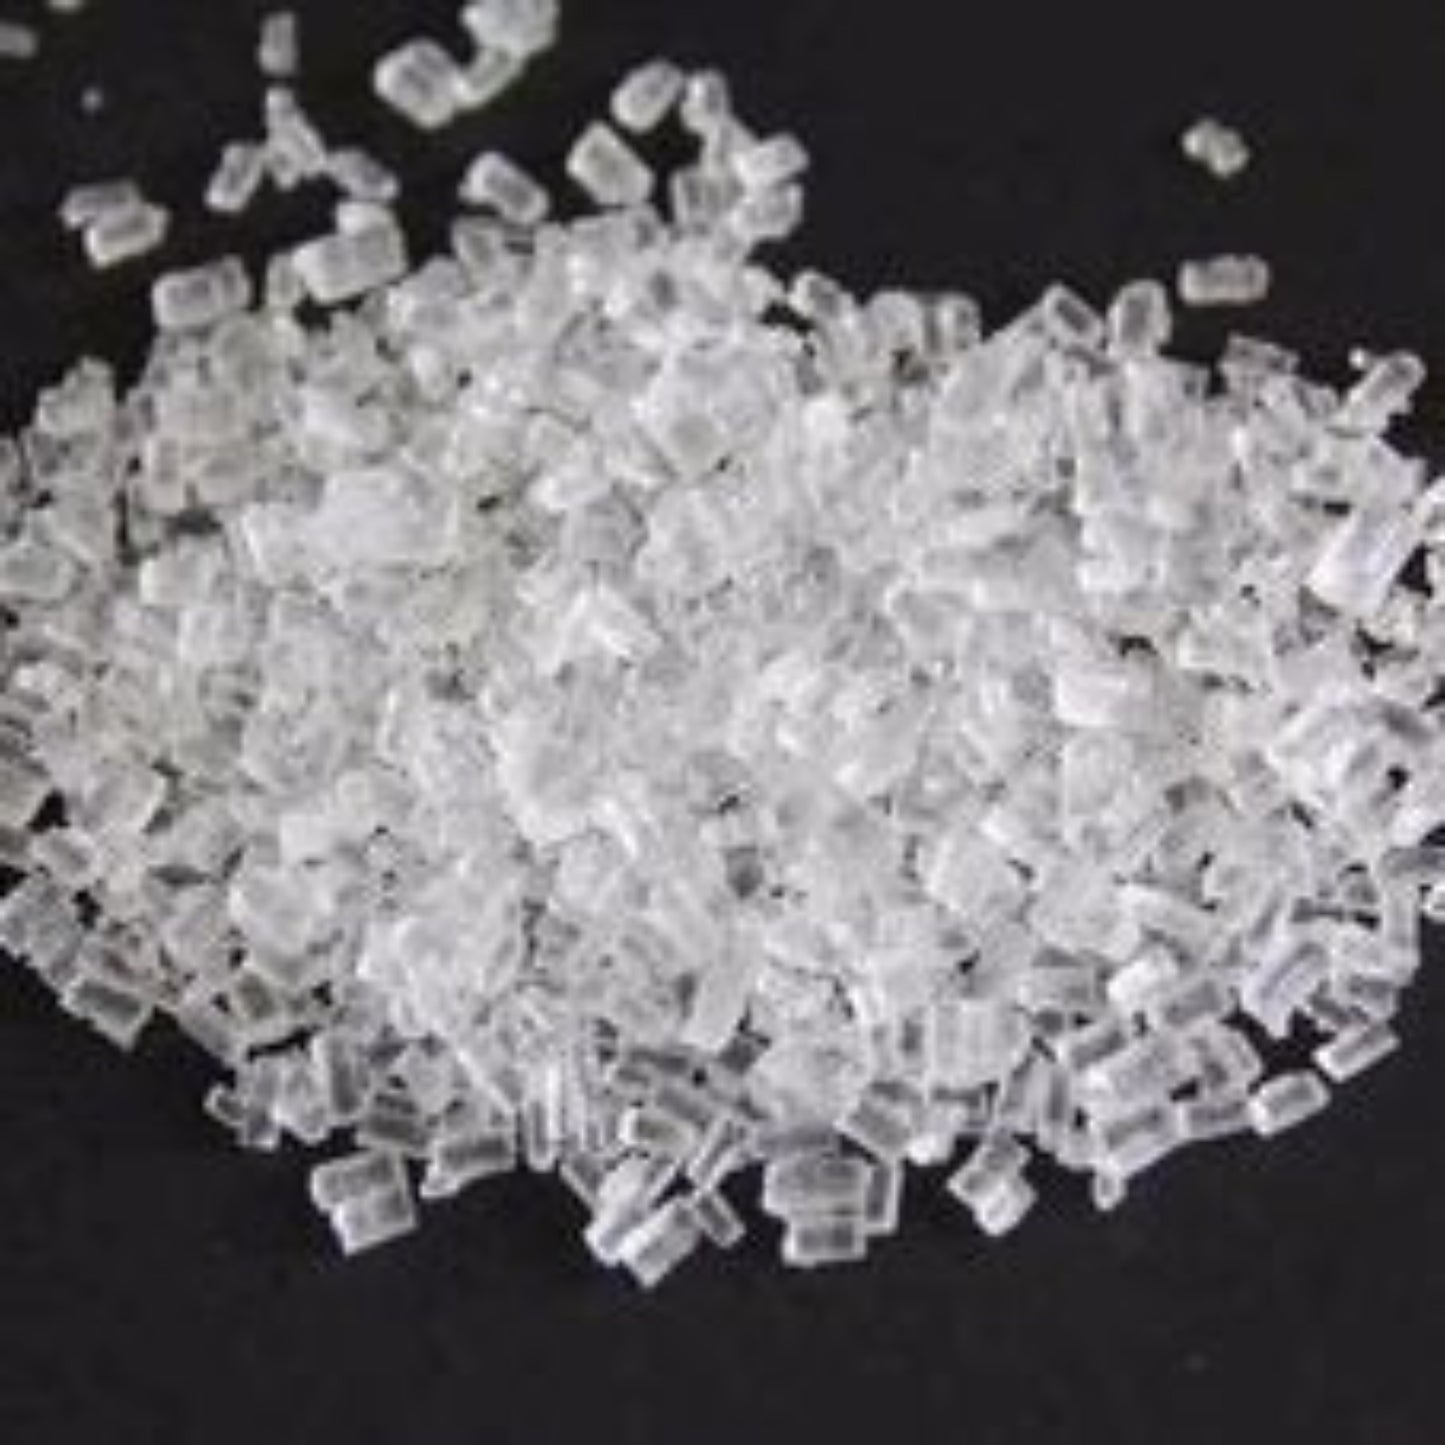 Sodium Thiosulphate Crystals 98%